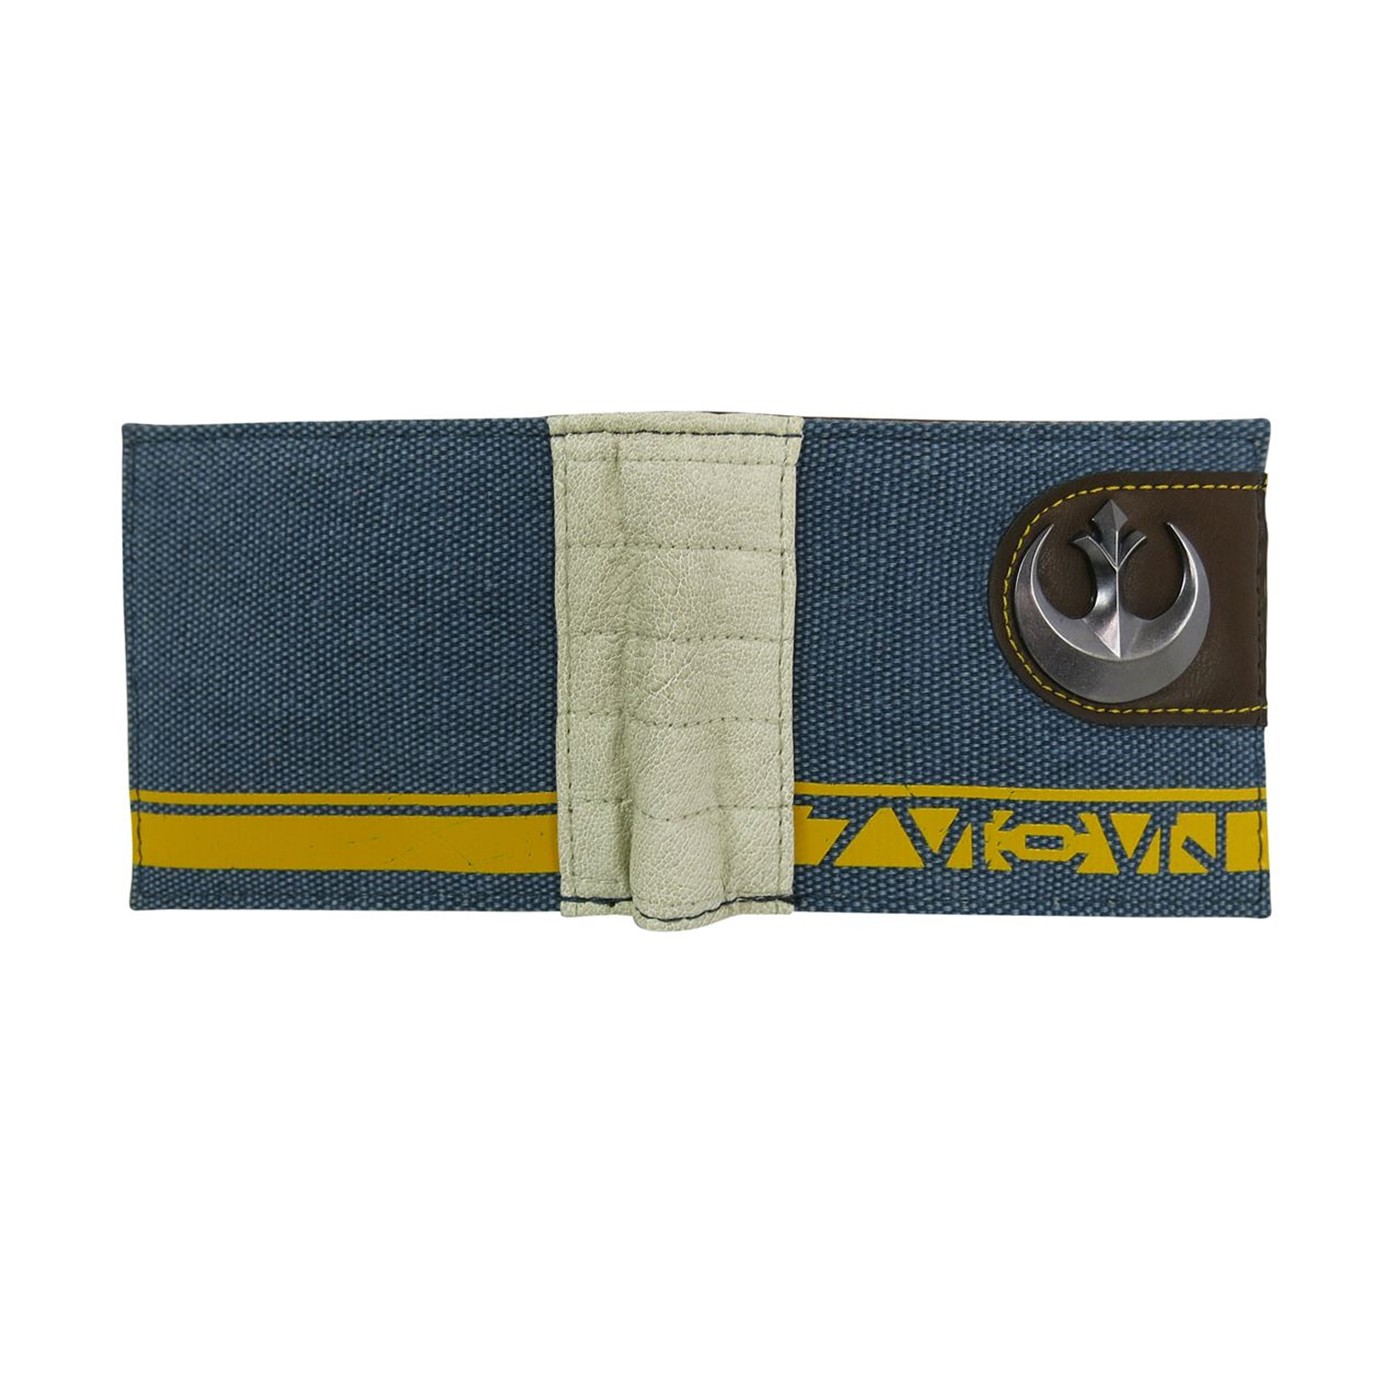 Star Wars Rogue One Rebel Symbol Bi-Fold Wallet